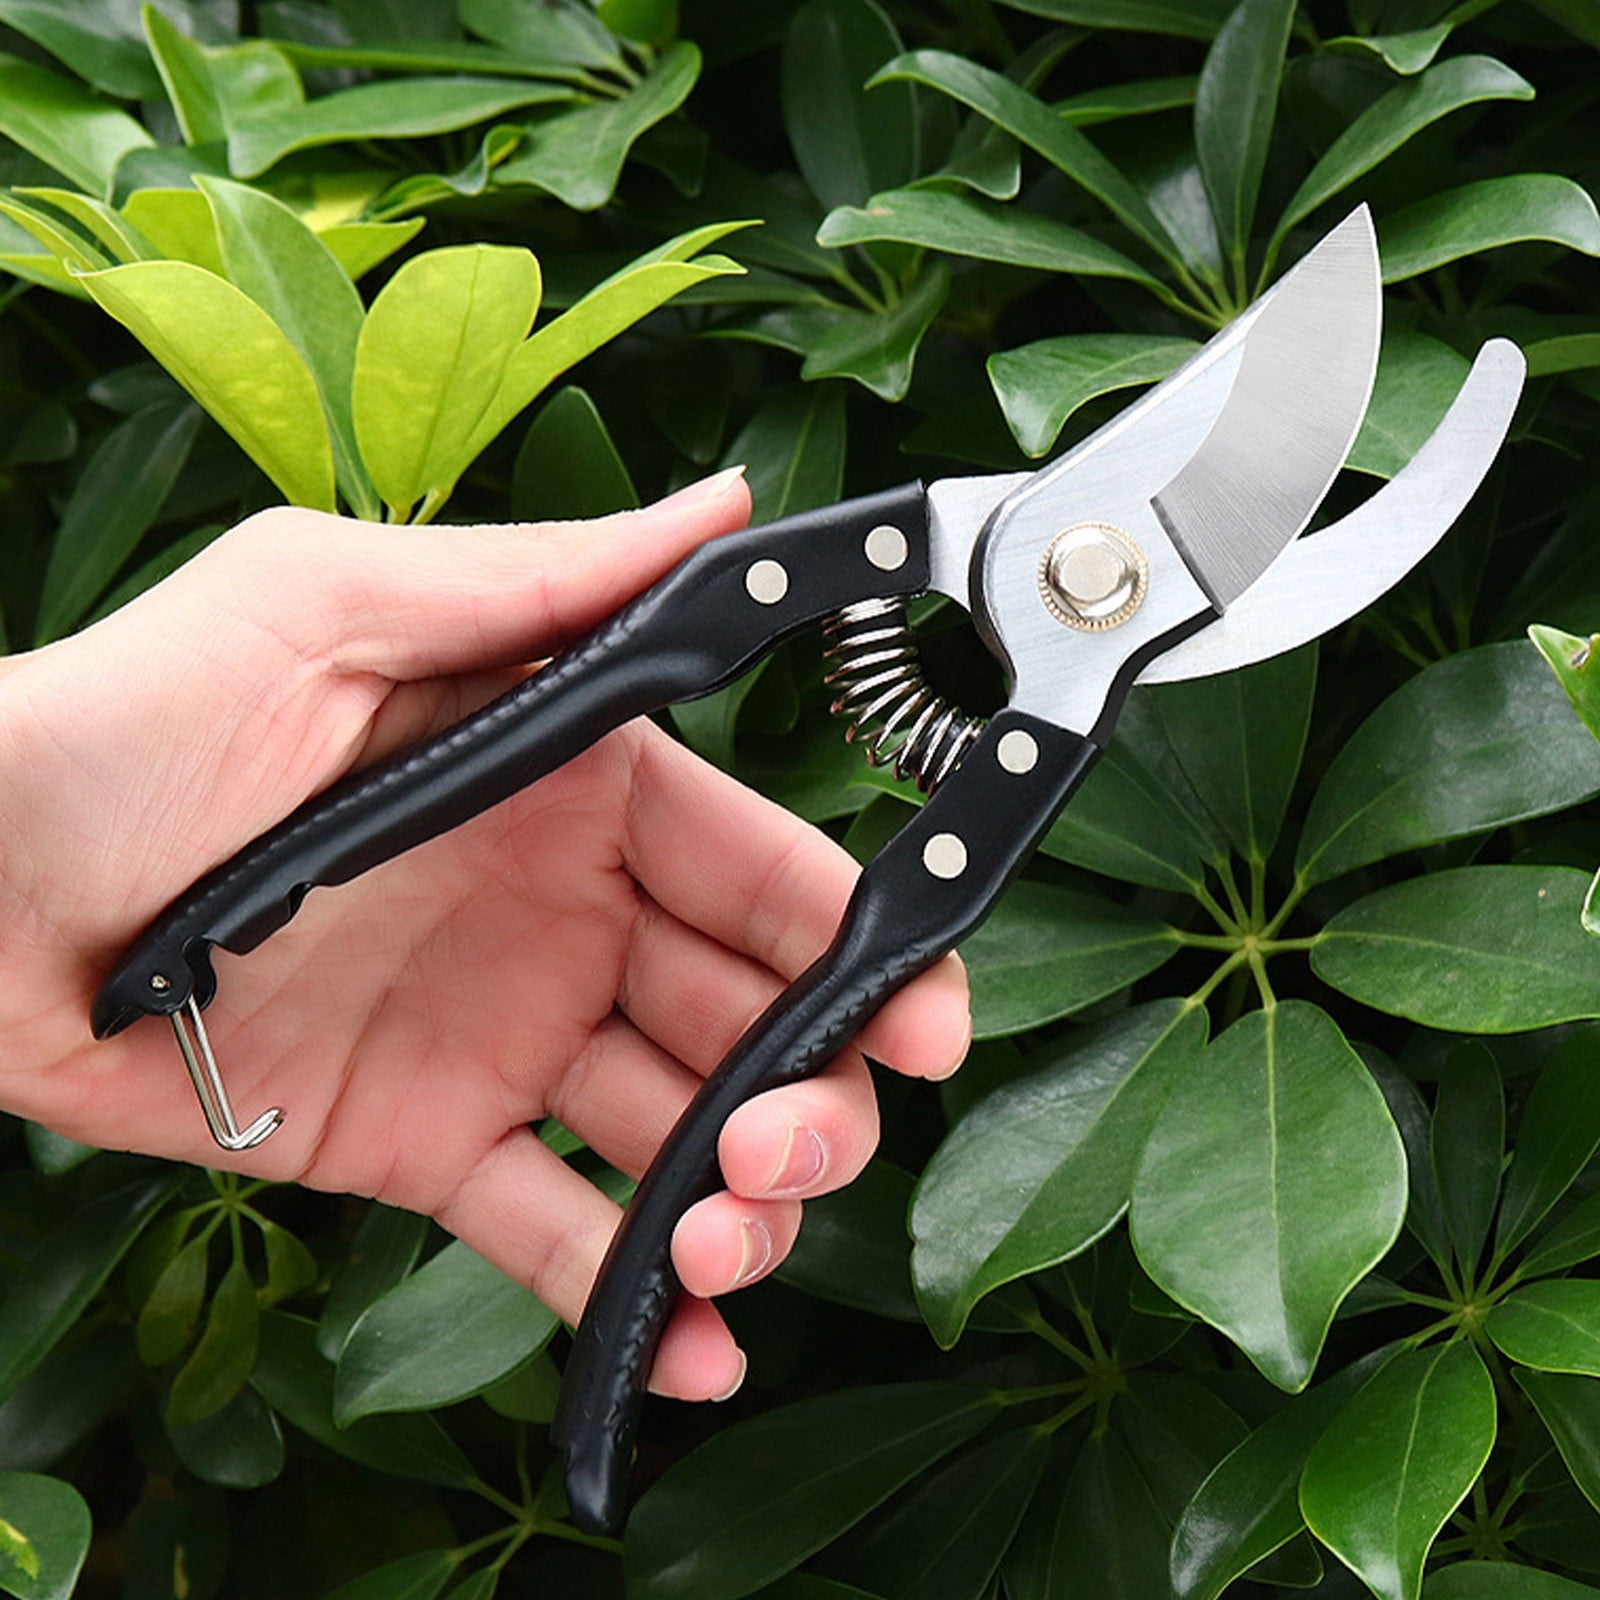 Pocket Gardening Snips - Lightweight Pruner